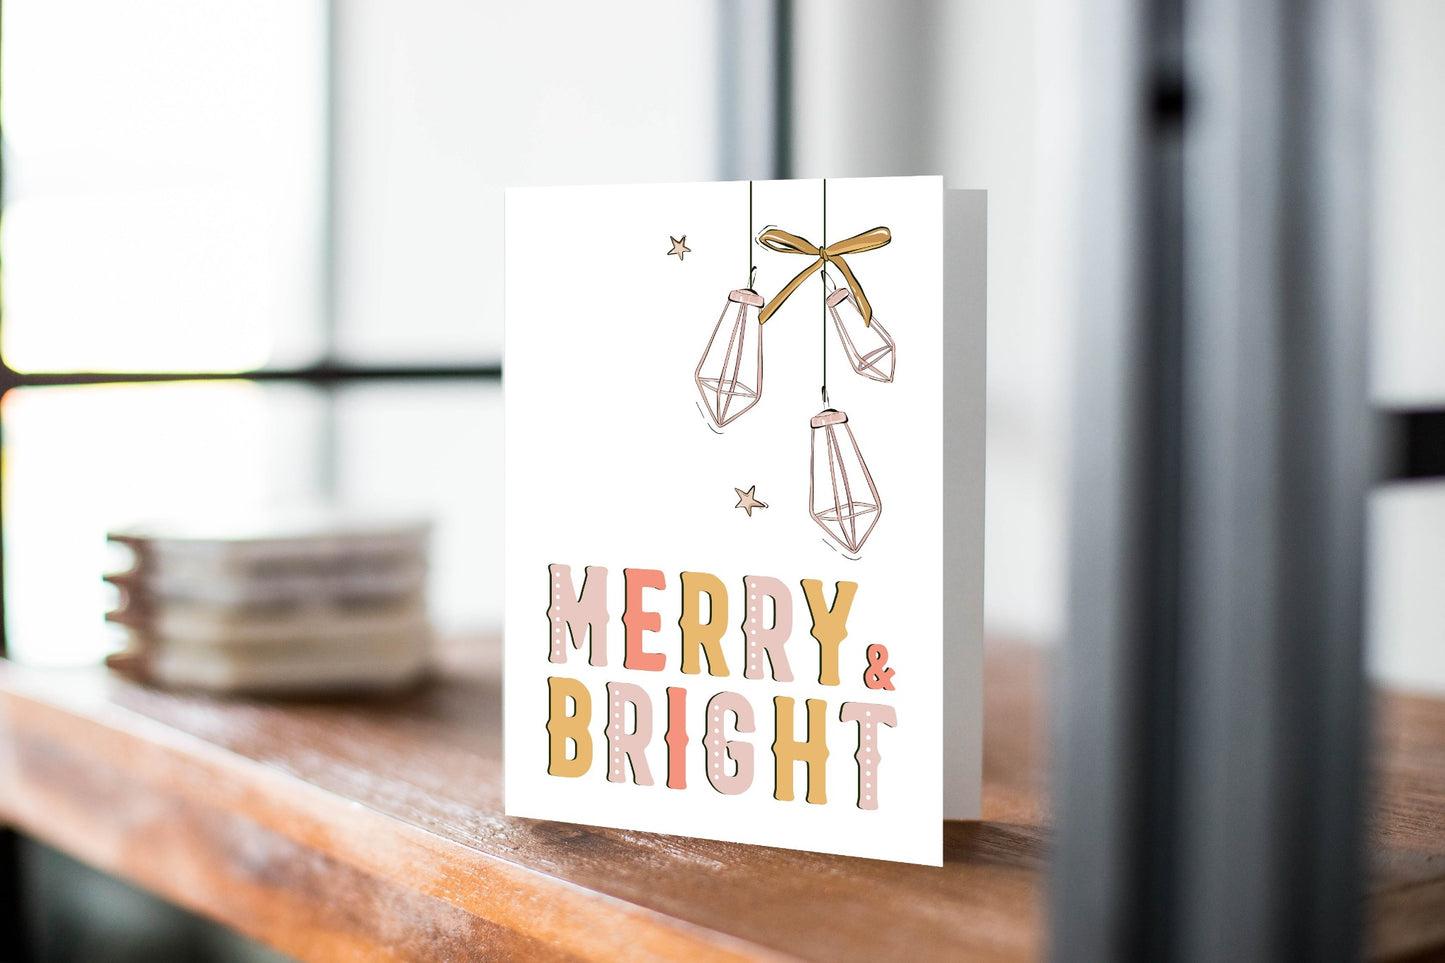 Merry & Bright Sparkles Happy Holidays Christmas Card.